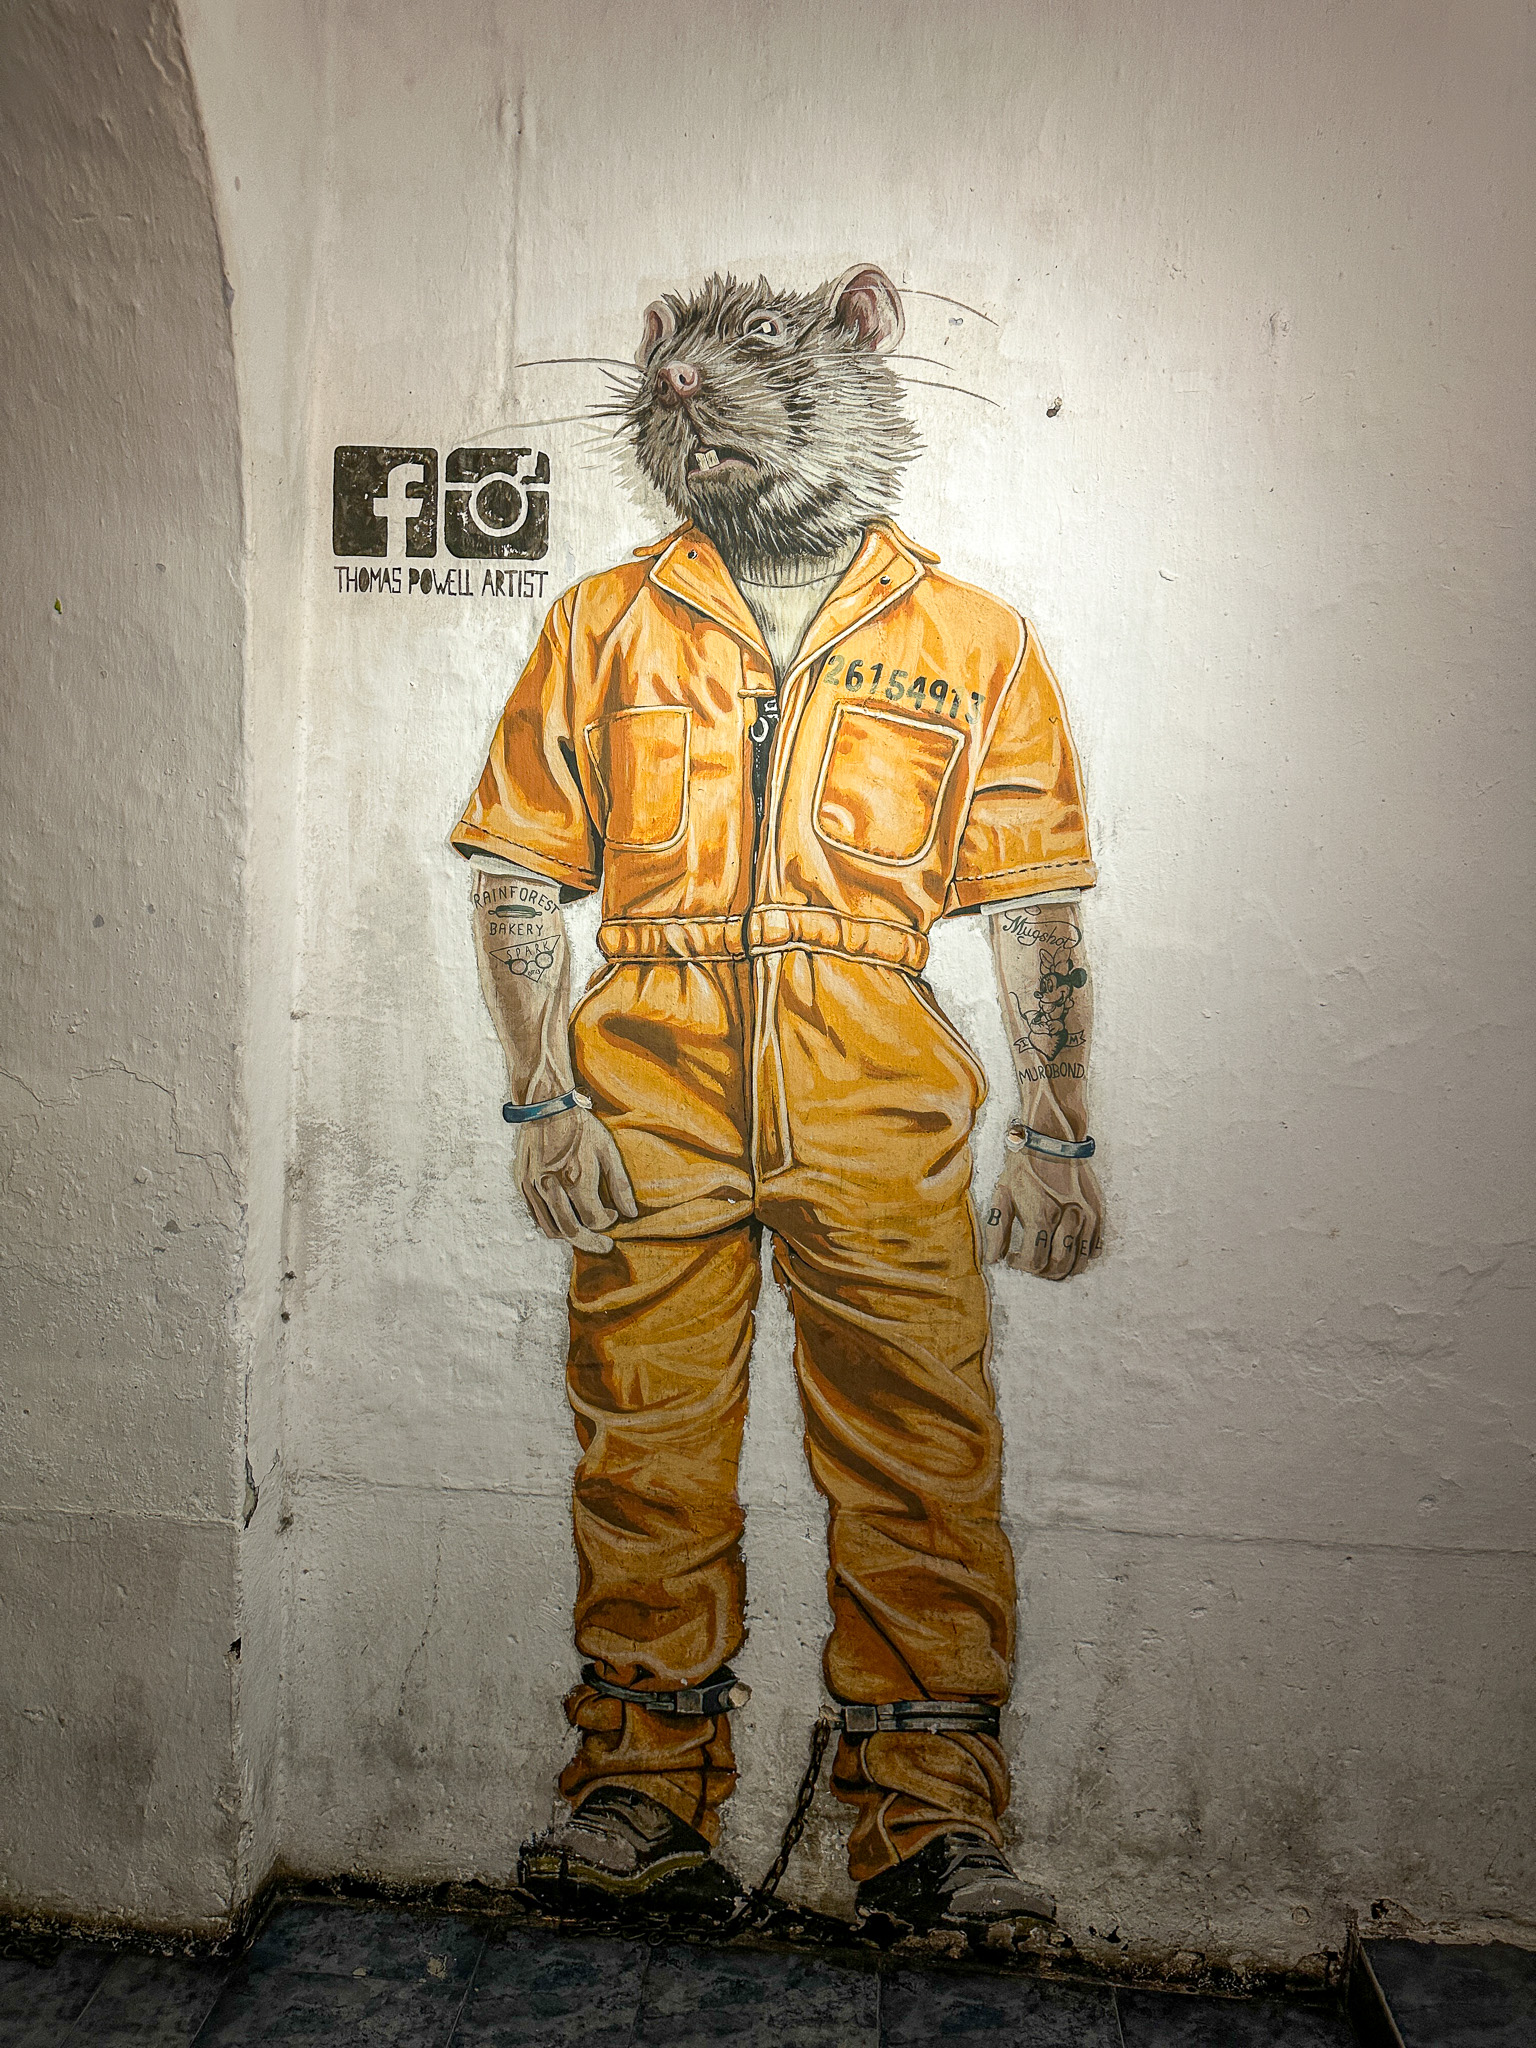 thomas powell jail rat street art graffiti in penang georgetown malaysia